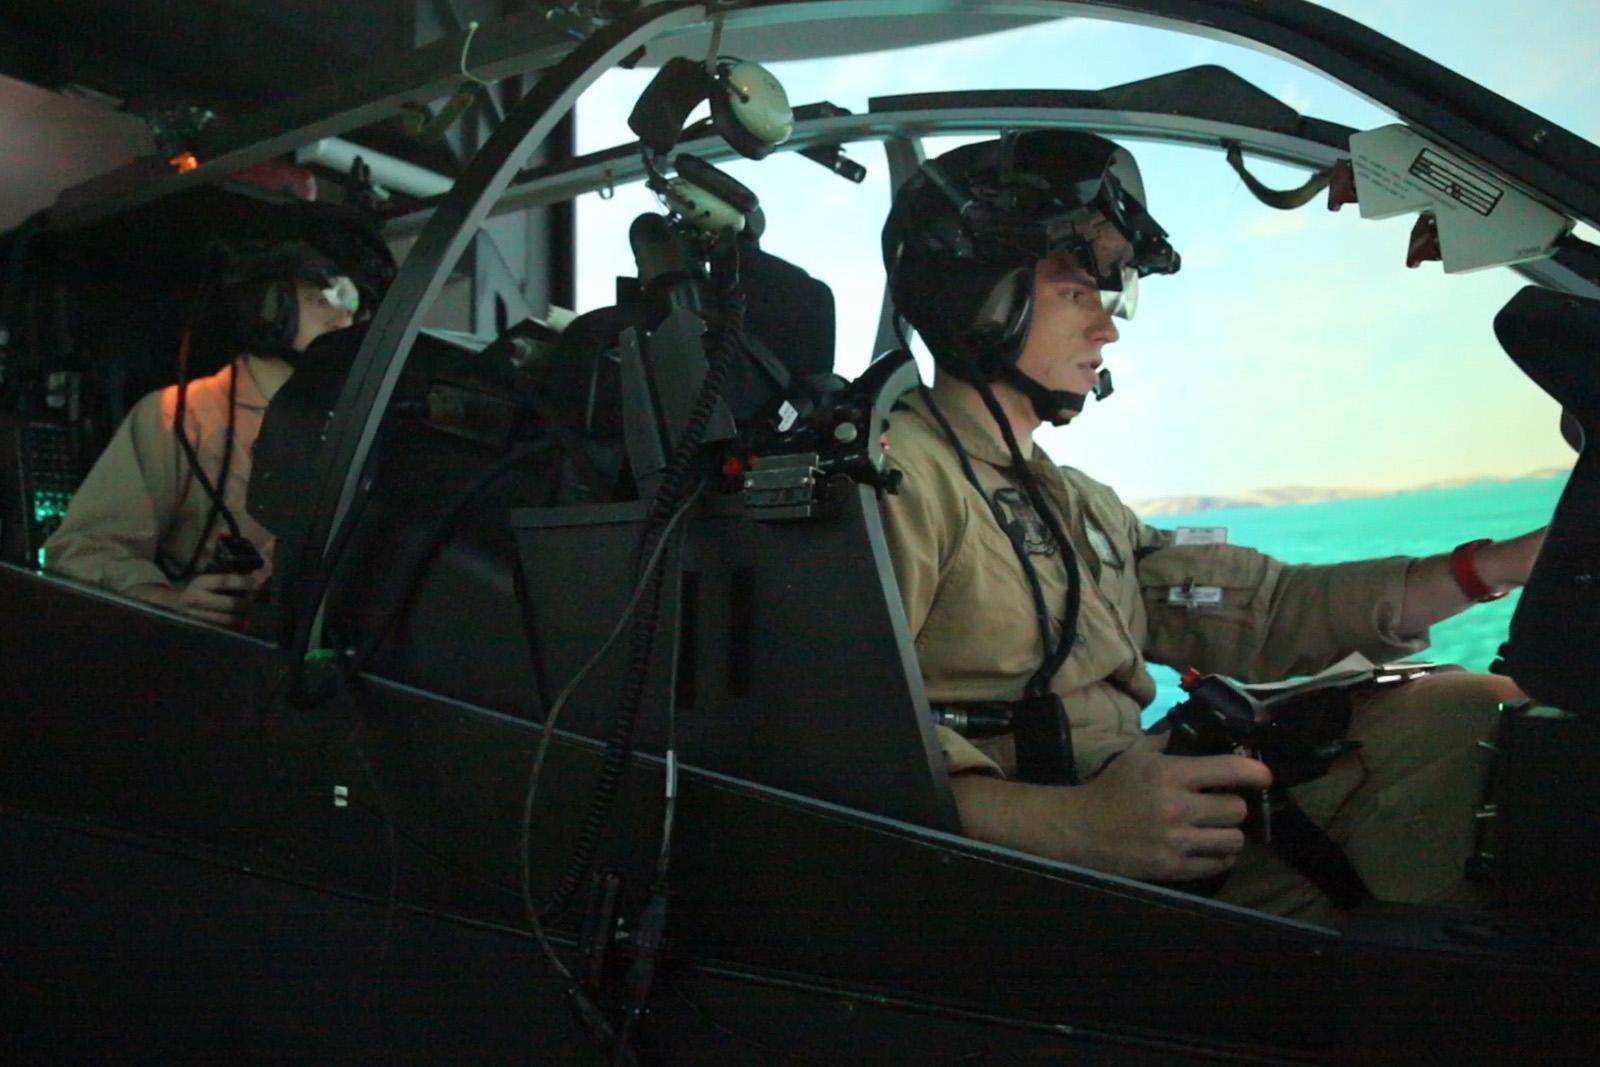 A U.S. Marine Corps aviator training